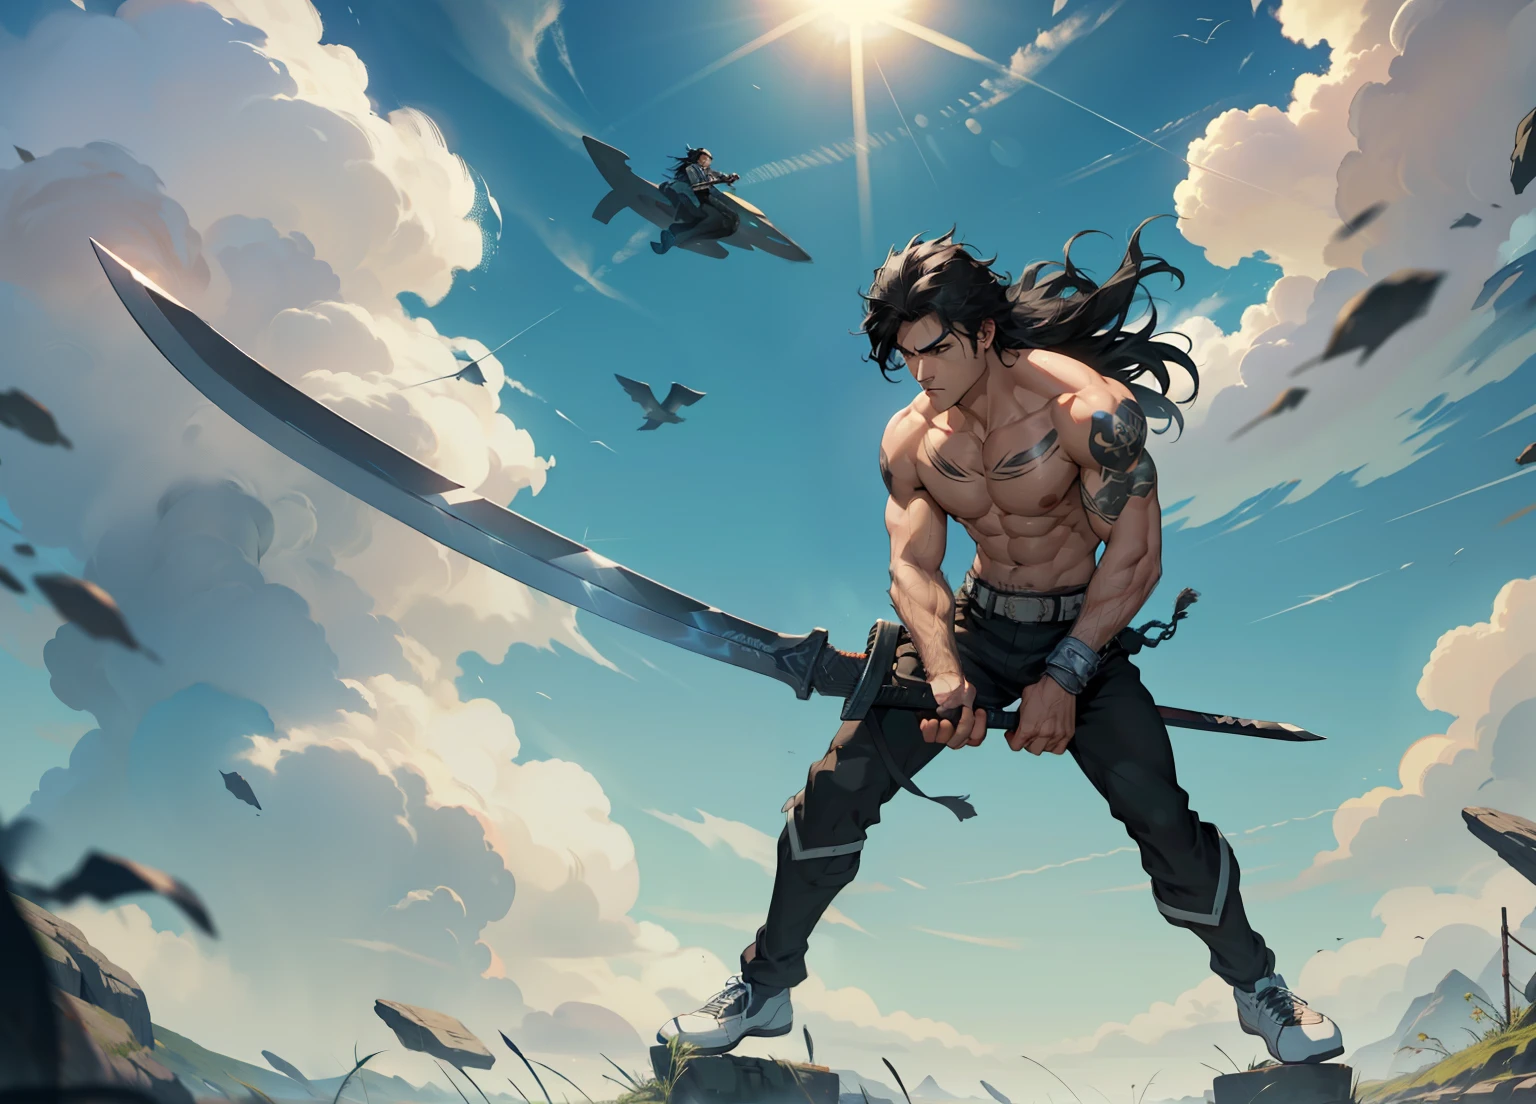 1boy, 26 Years old, Serious face, black hair, long hair, muscular, shirtless, ((black long pants)), holding giant sword, blue sky, cloud